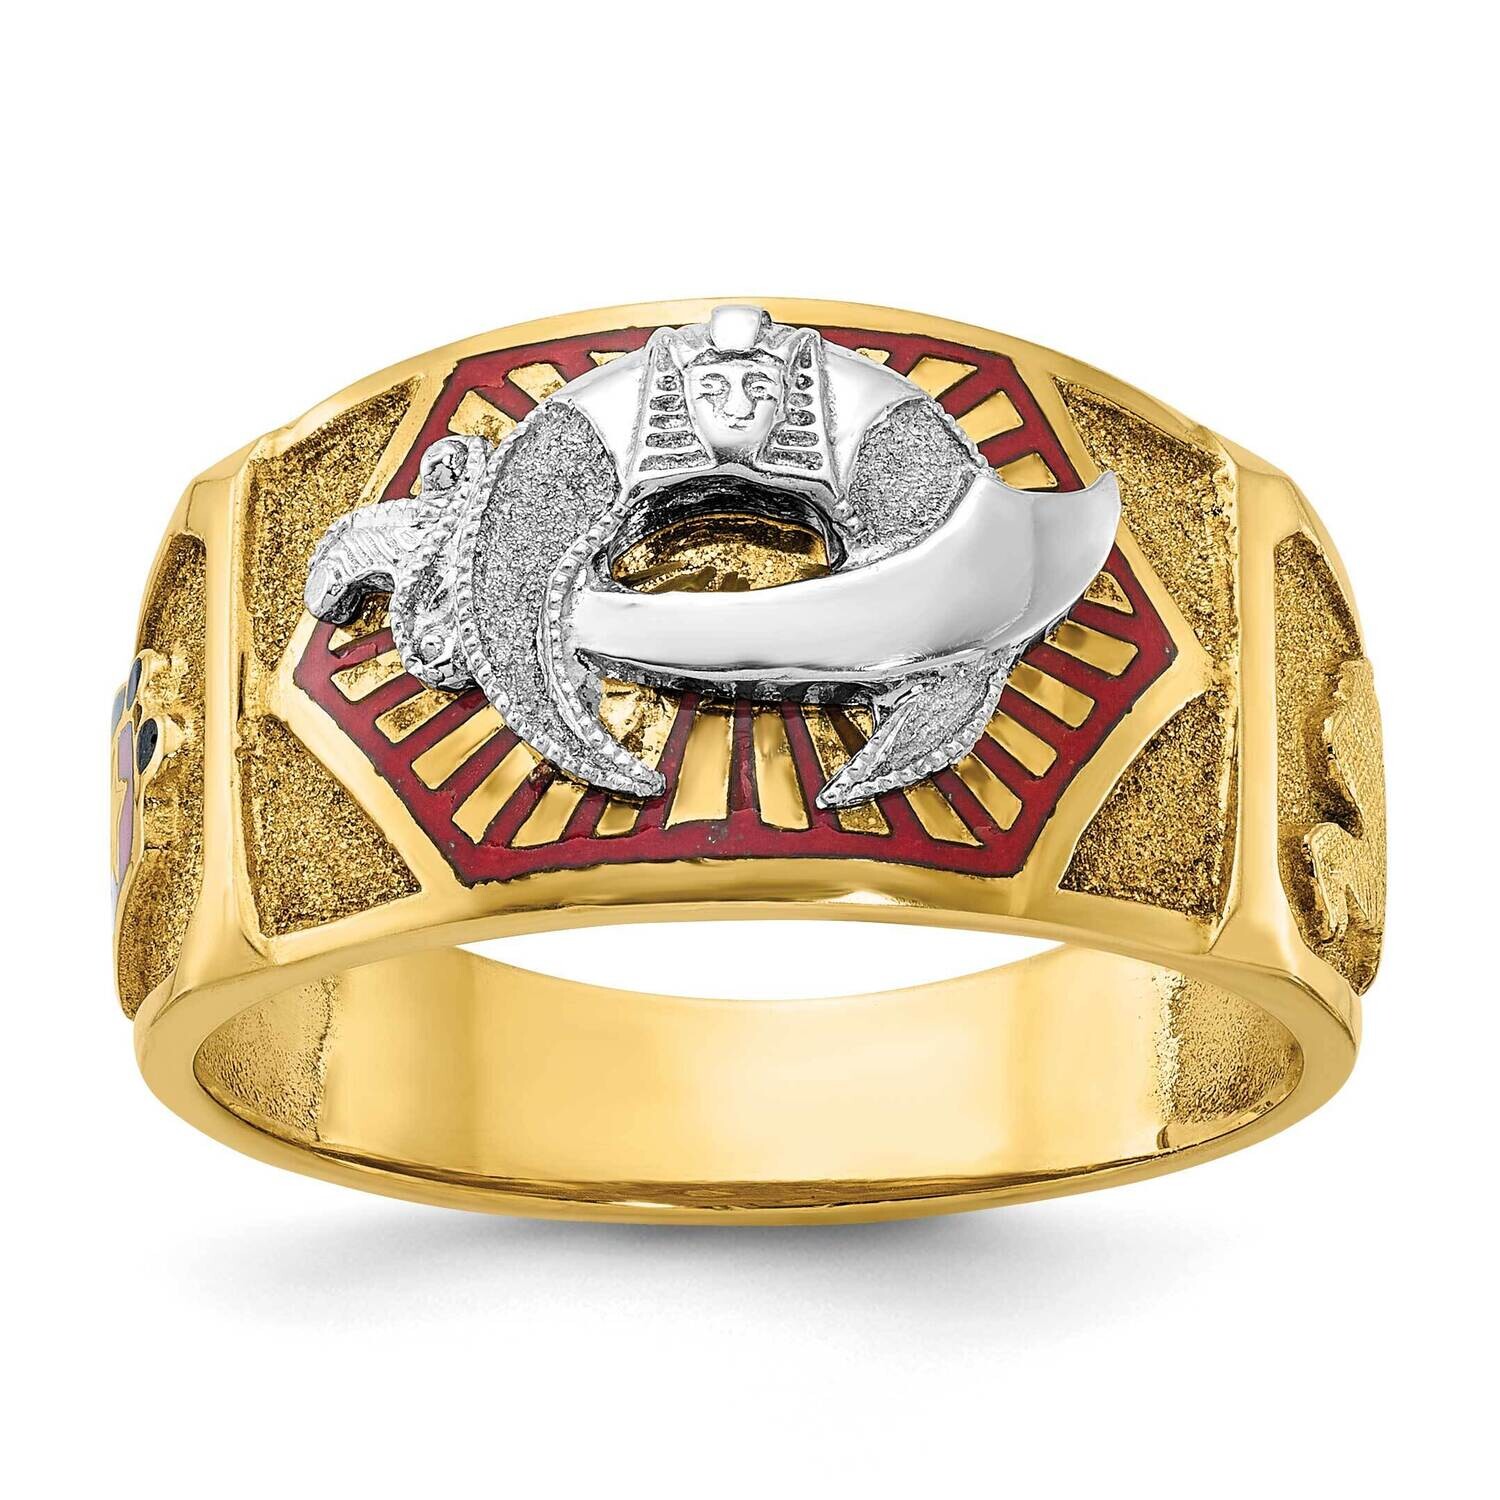 Ibgoodman Men's Polished Textured Multi-Color Enamel Masonic Shriner's Ring 14k Two-Tone Gold B02420-4YW